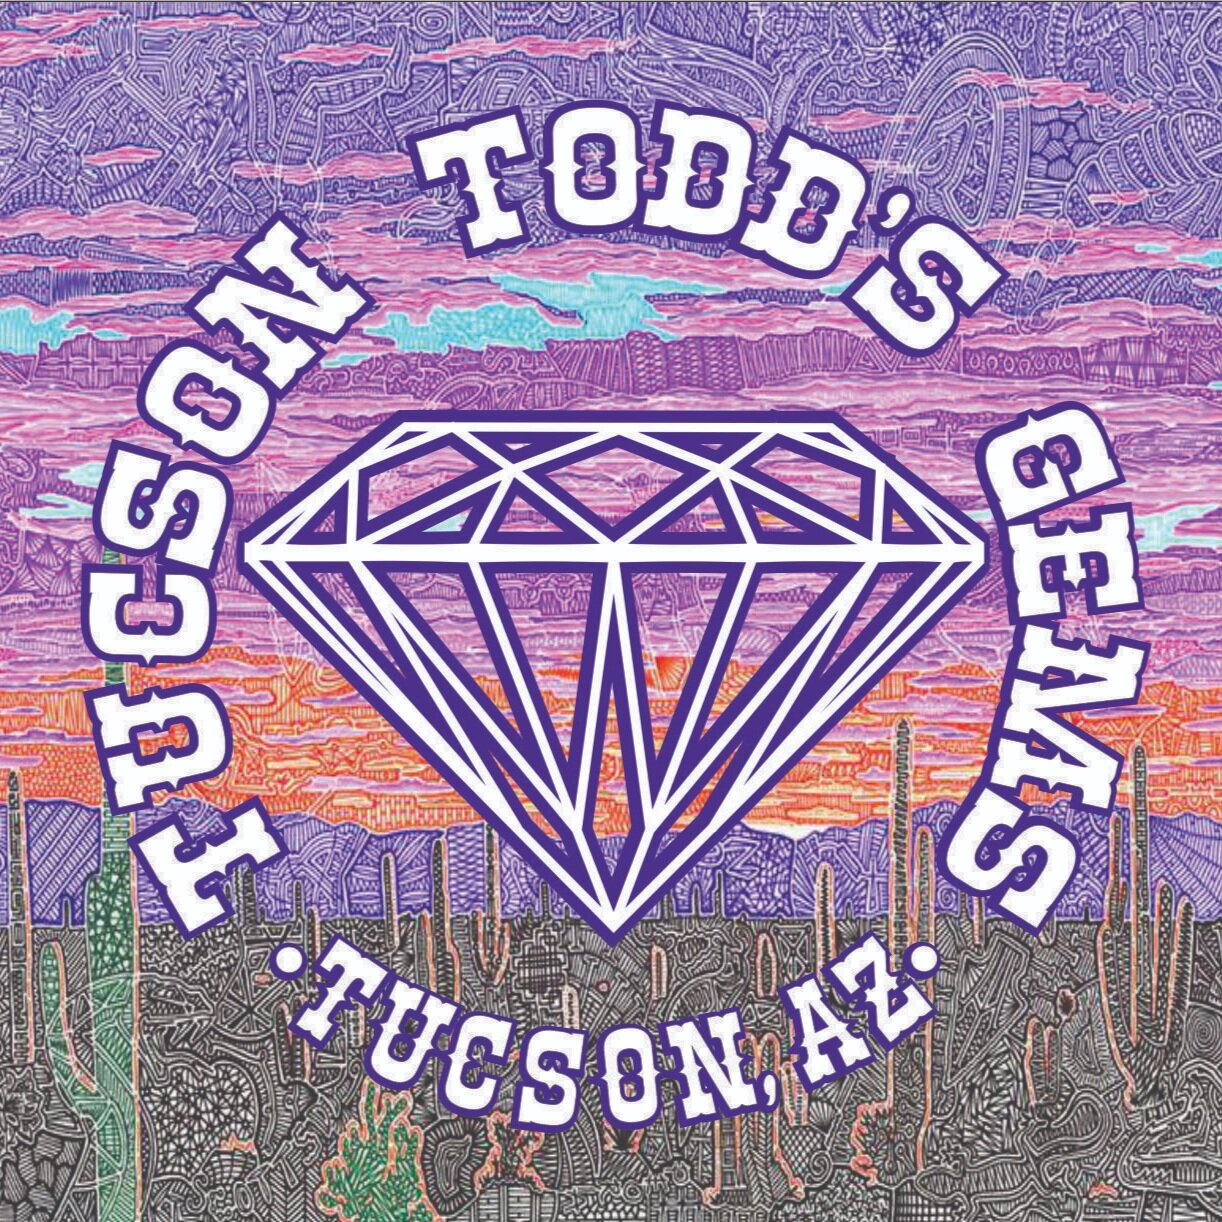 Tucson Todd's Gems